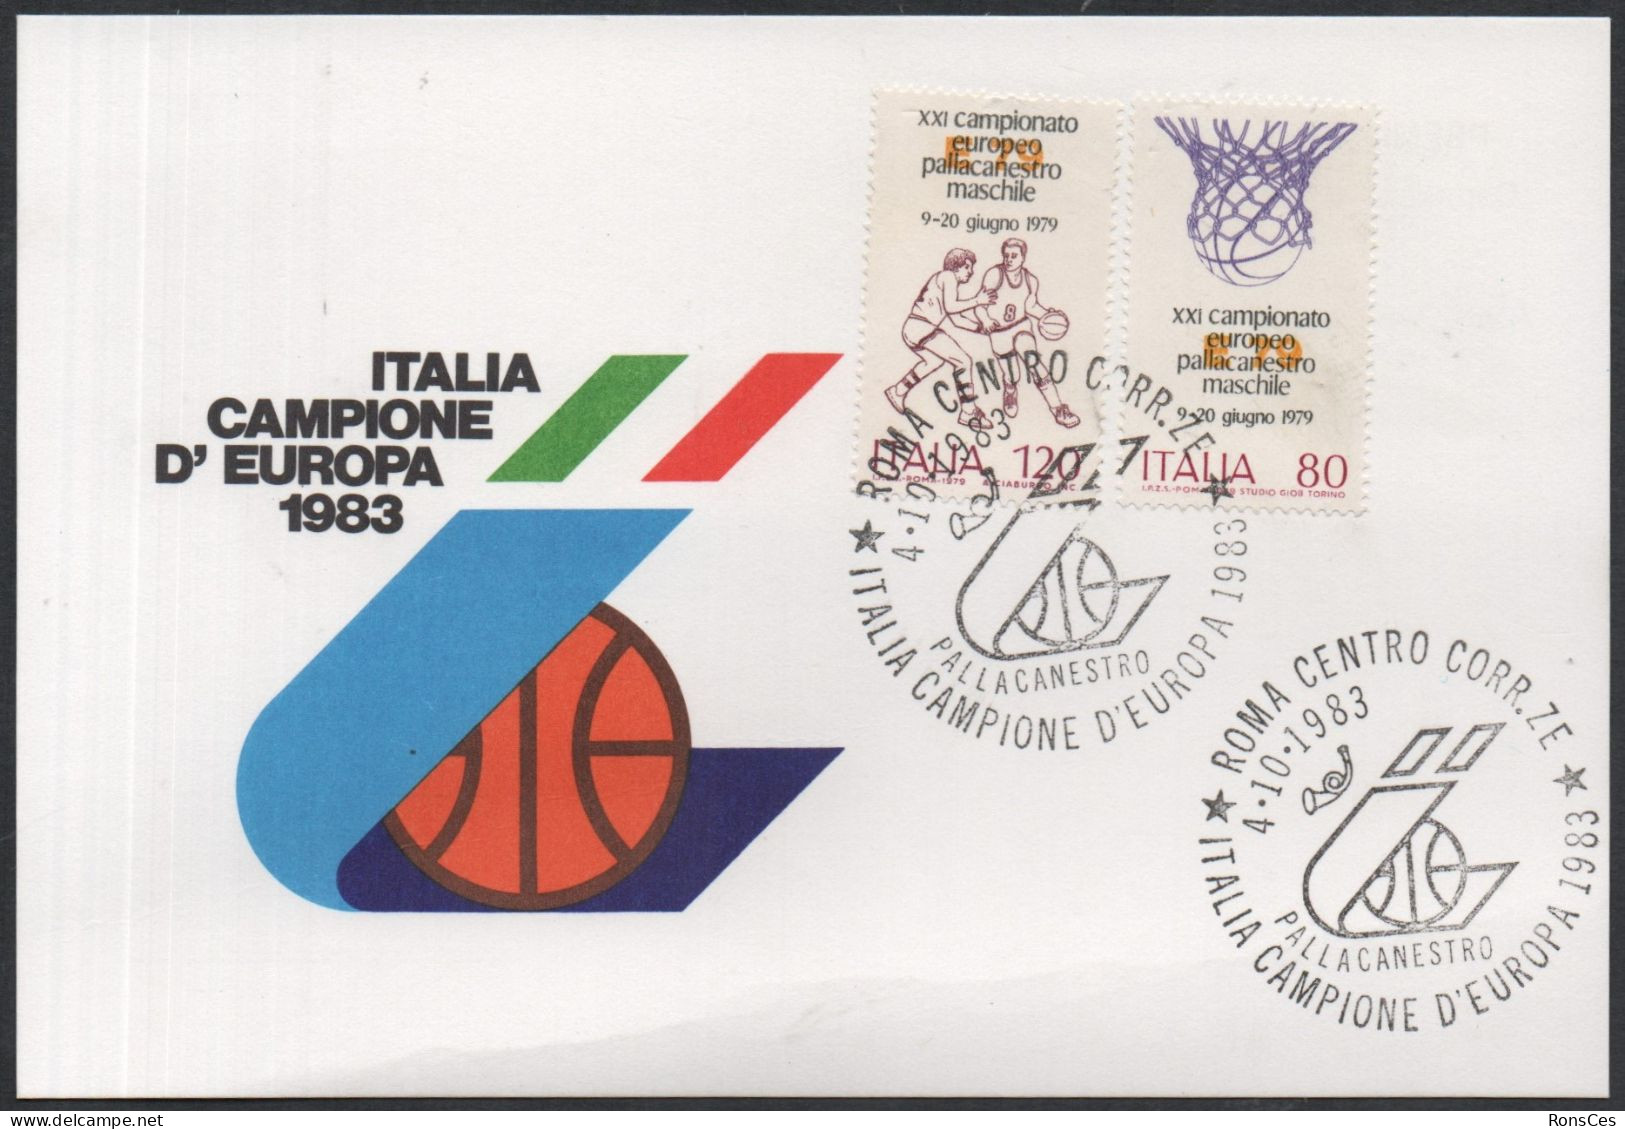 BASKETBALL - ITALIA ROMA 1983 - ITALIA CAMPIONE D'EUROPA PALLACAMESTRO - CARTOLINA UFFICIALE - A - Basket-ball